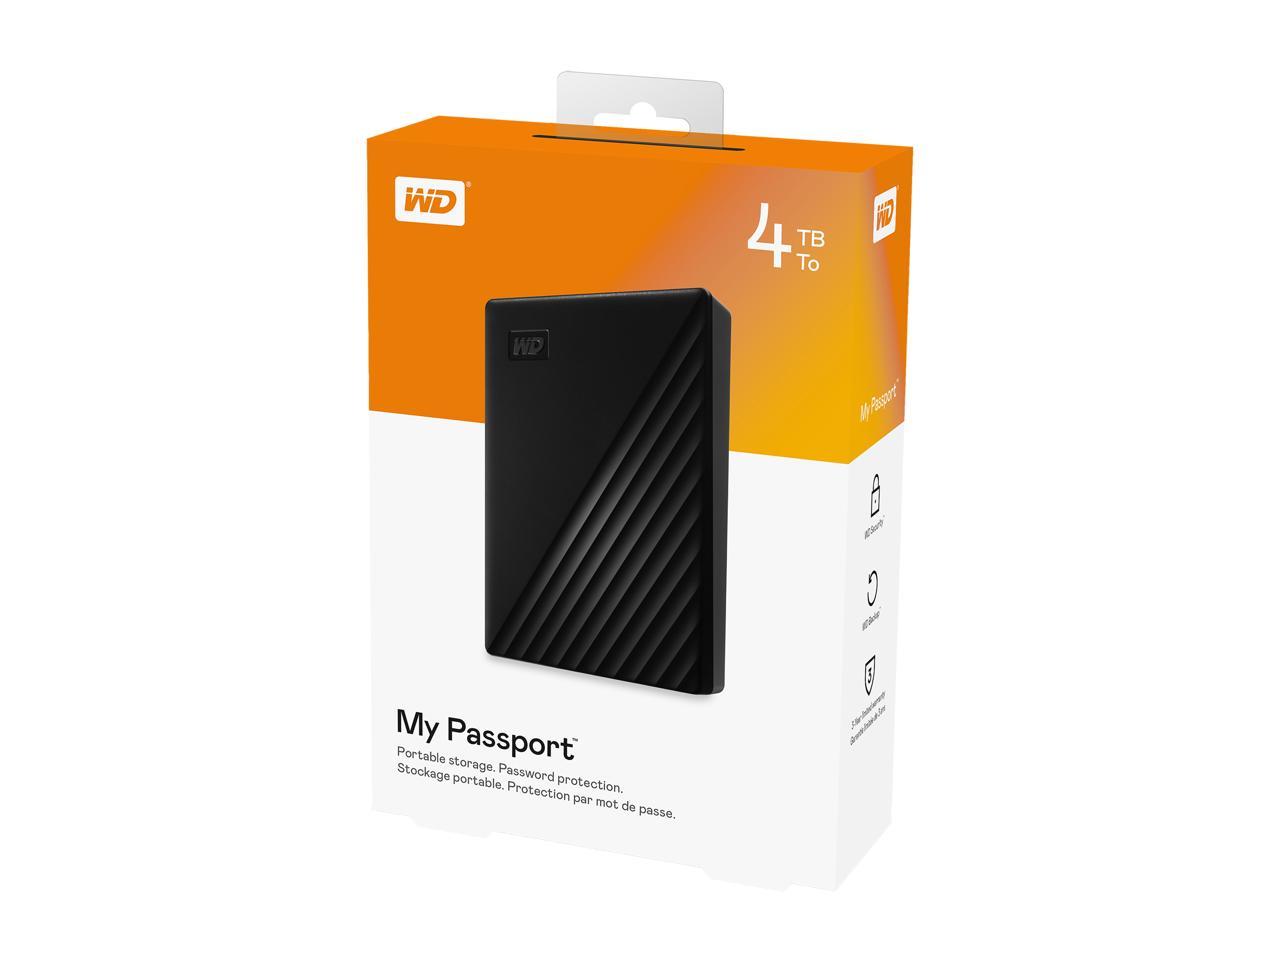 WD 4TB My Passport Portable Storage External Hard Drive - Newegg.com